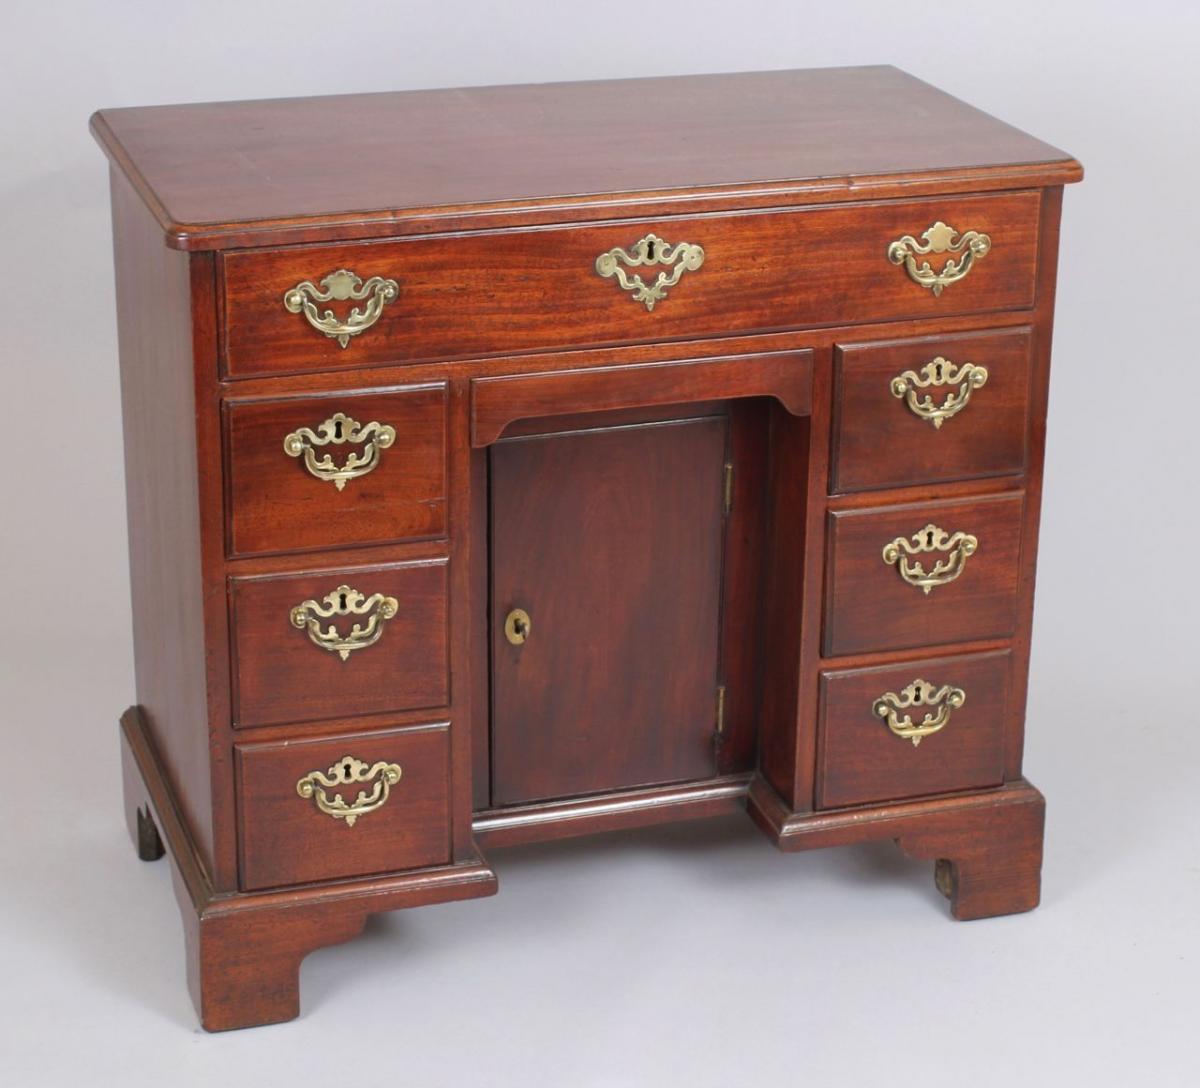 George II period mahogany kneehole dressing-table